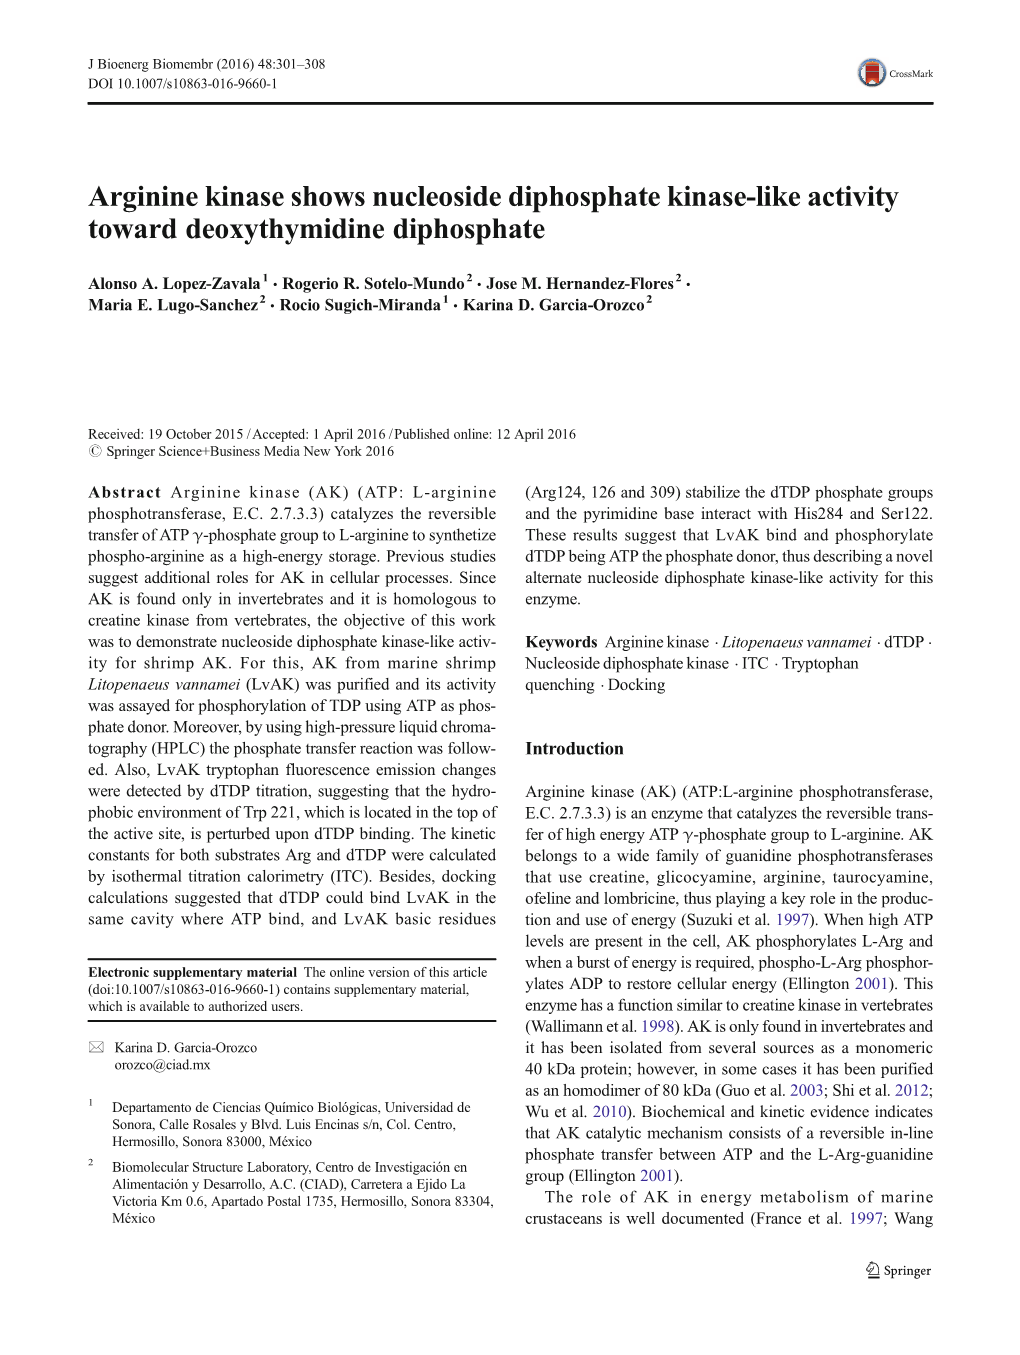 Arginine Kinase Shows Nucleoside Diphosphate Kinase-Like Activity Toward Deoxythymidine Diphosphate